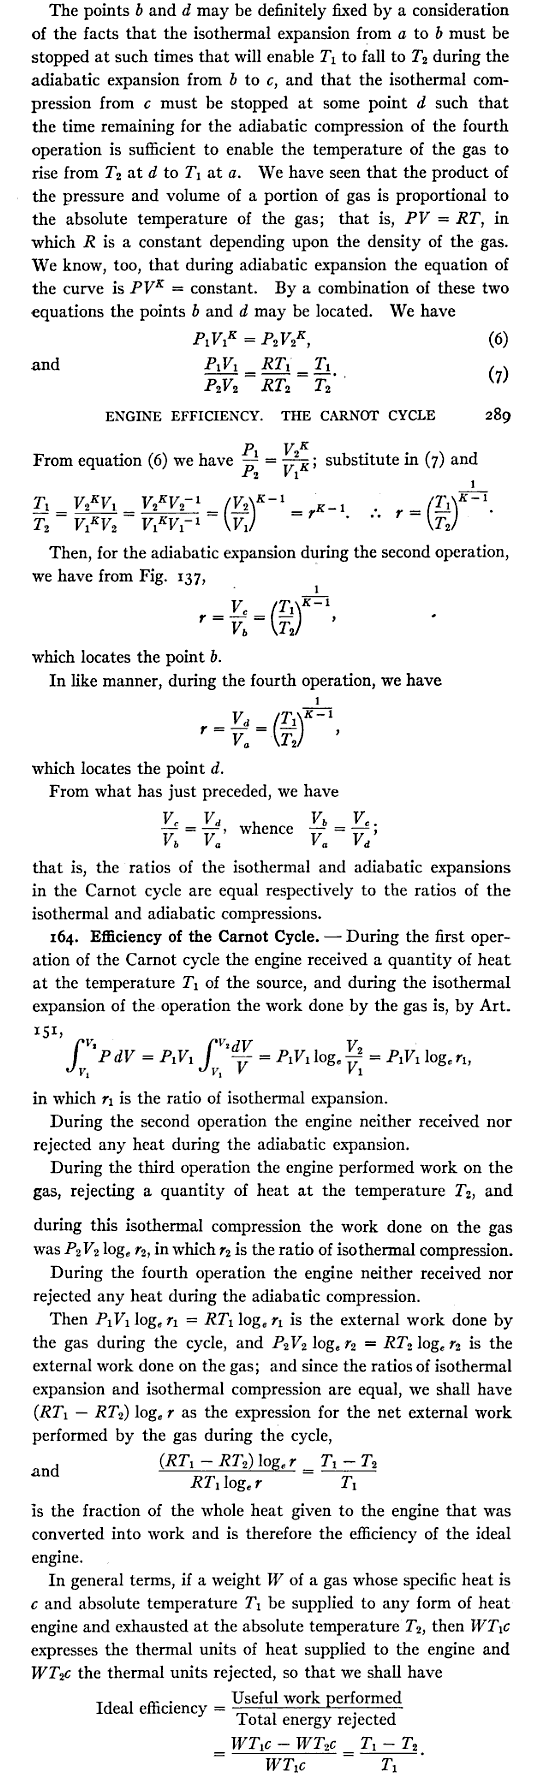 Carnot-math.png